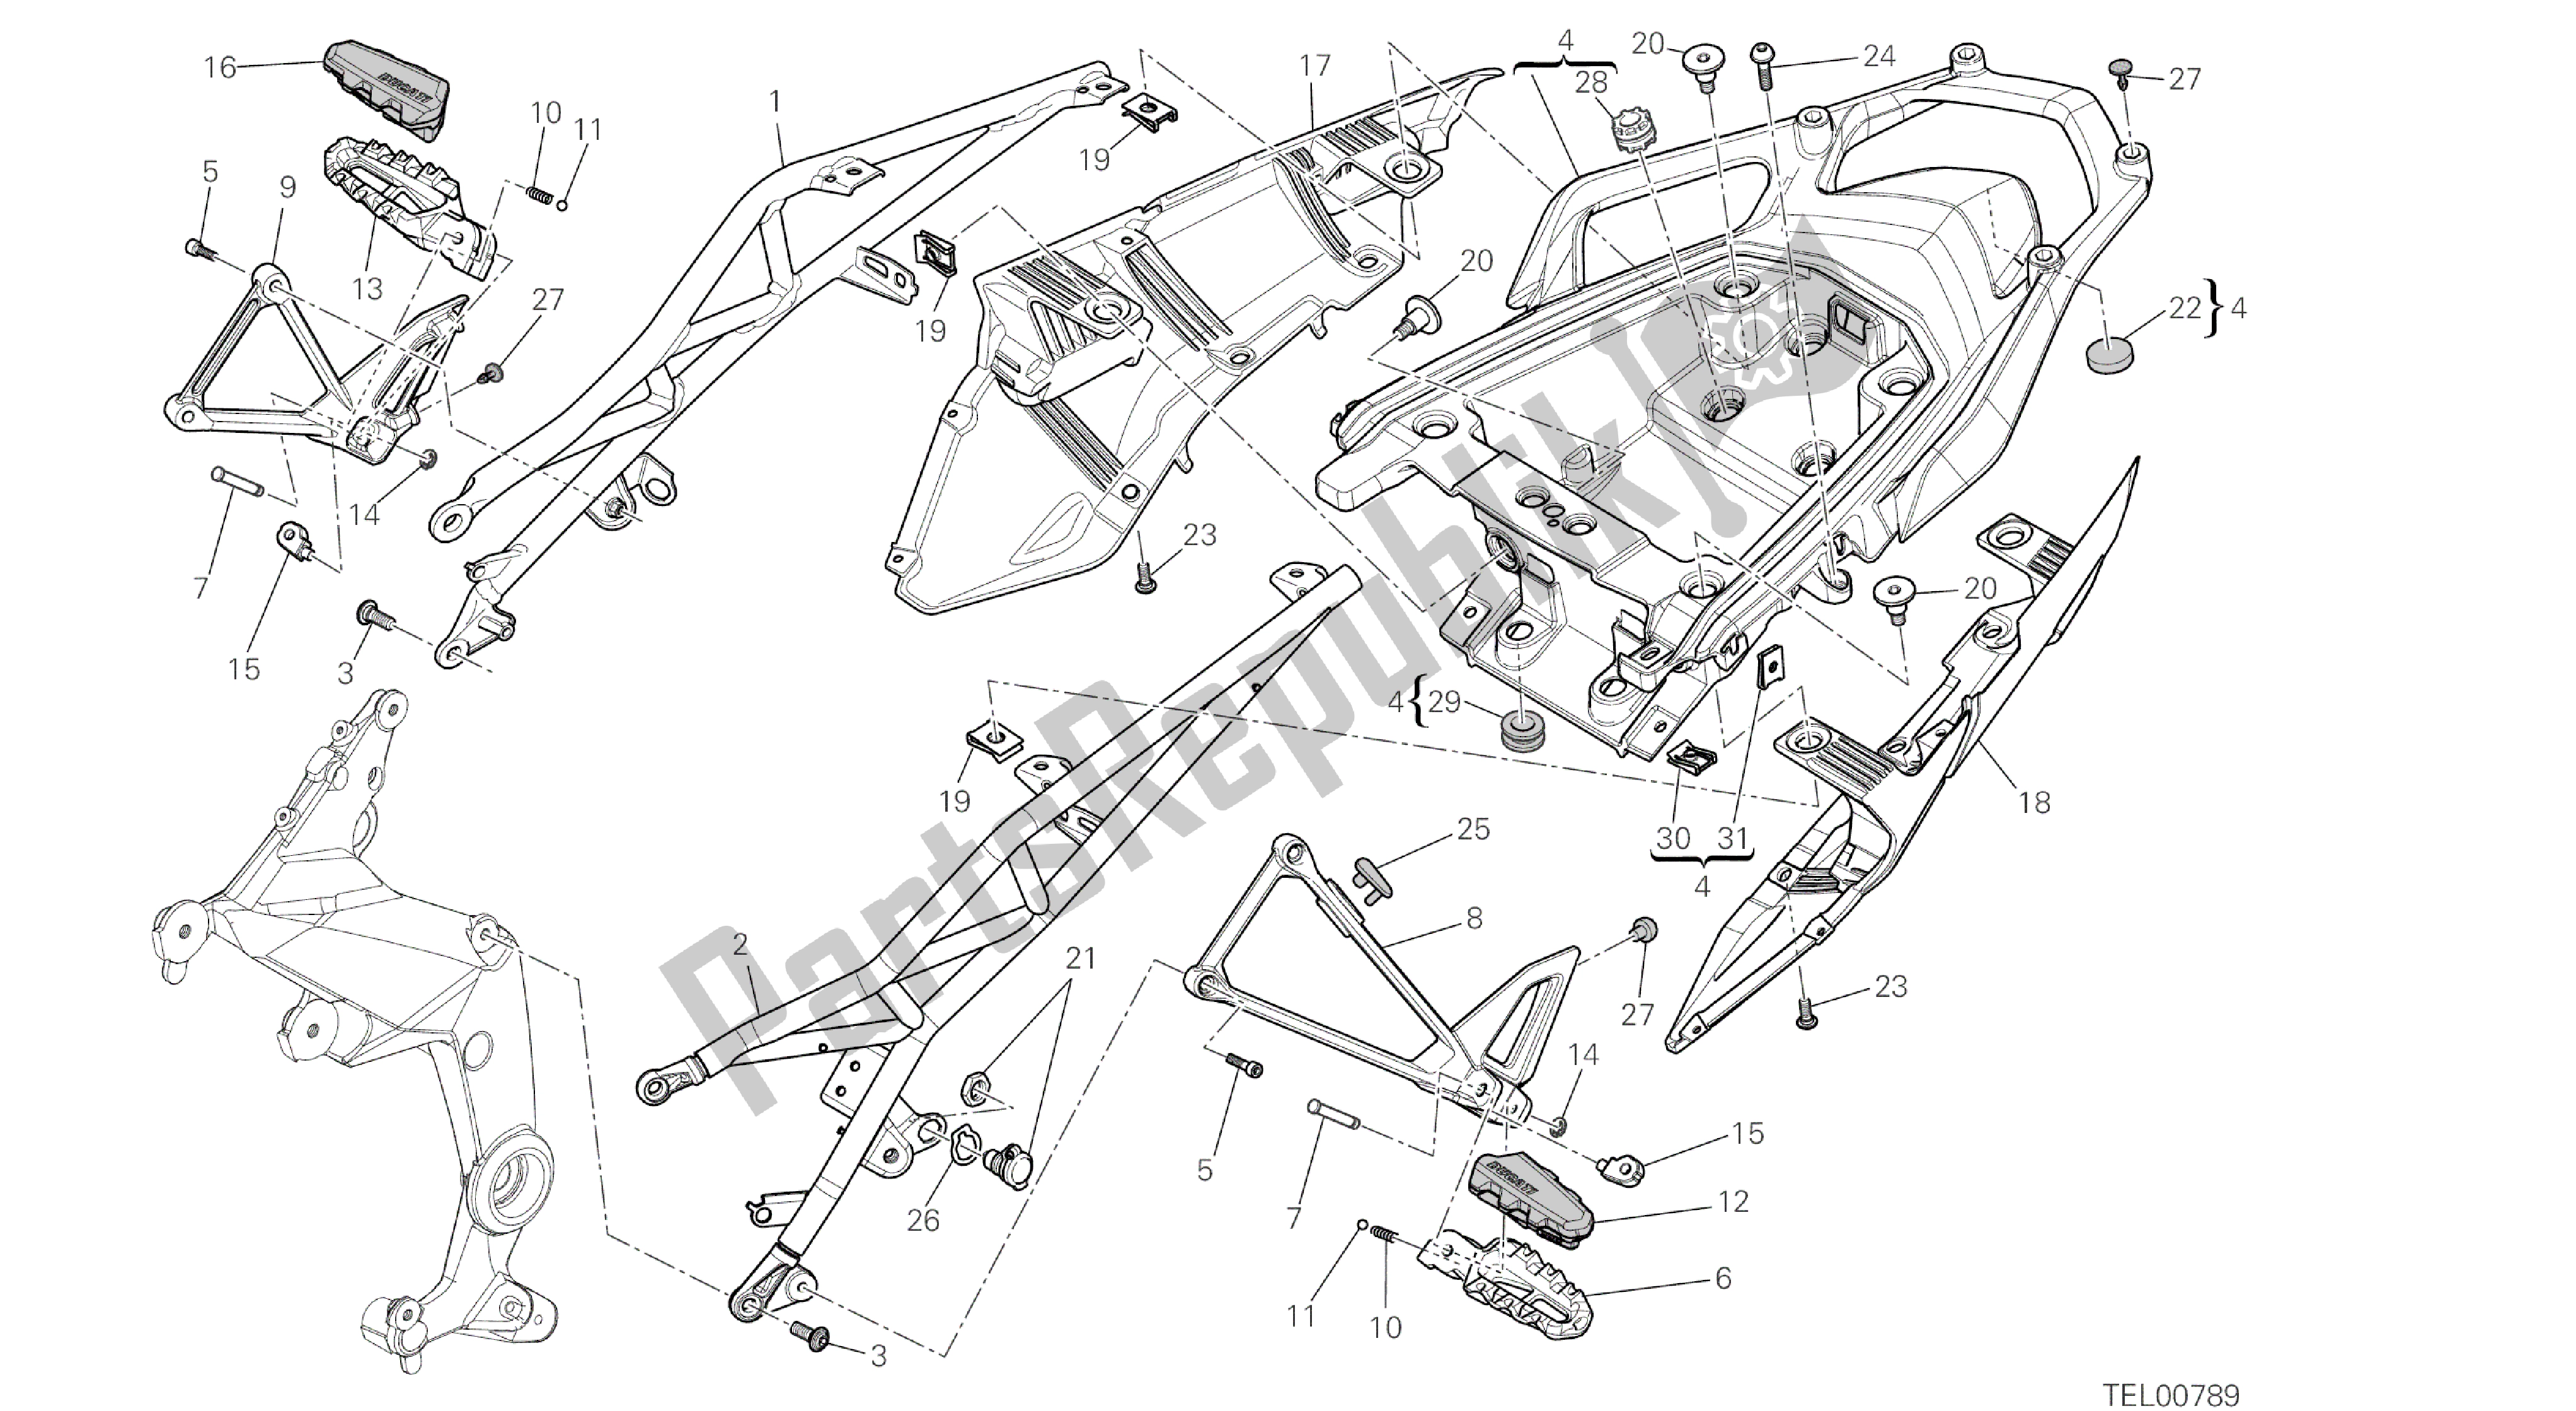 Alle onderdelen voor de Tekening 027 - Achterframe Comp. [mod: Ms1200pp; Xst: Aus, Eur, Fra, Jap, Tha] Groepsframe van de Ducati Multistrada S Pikes Peak 1200 2014